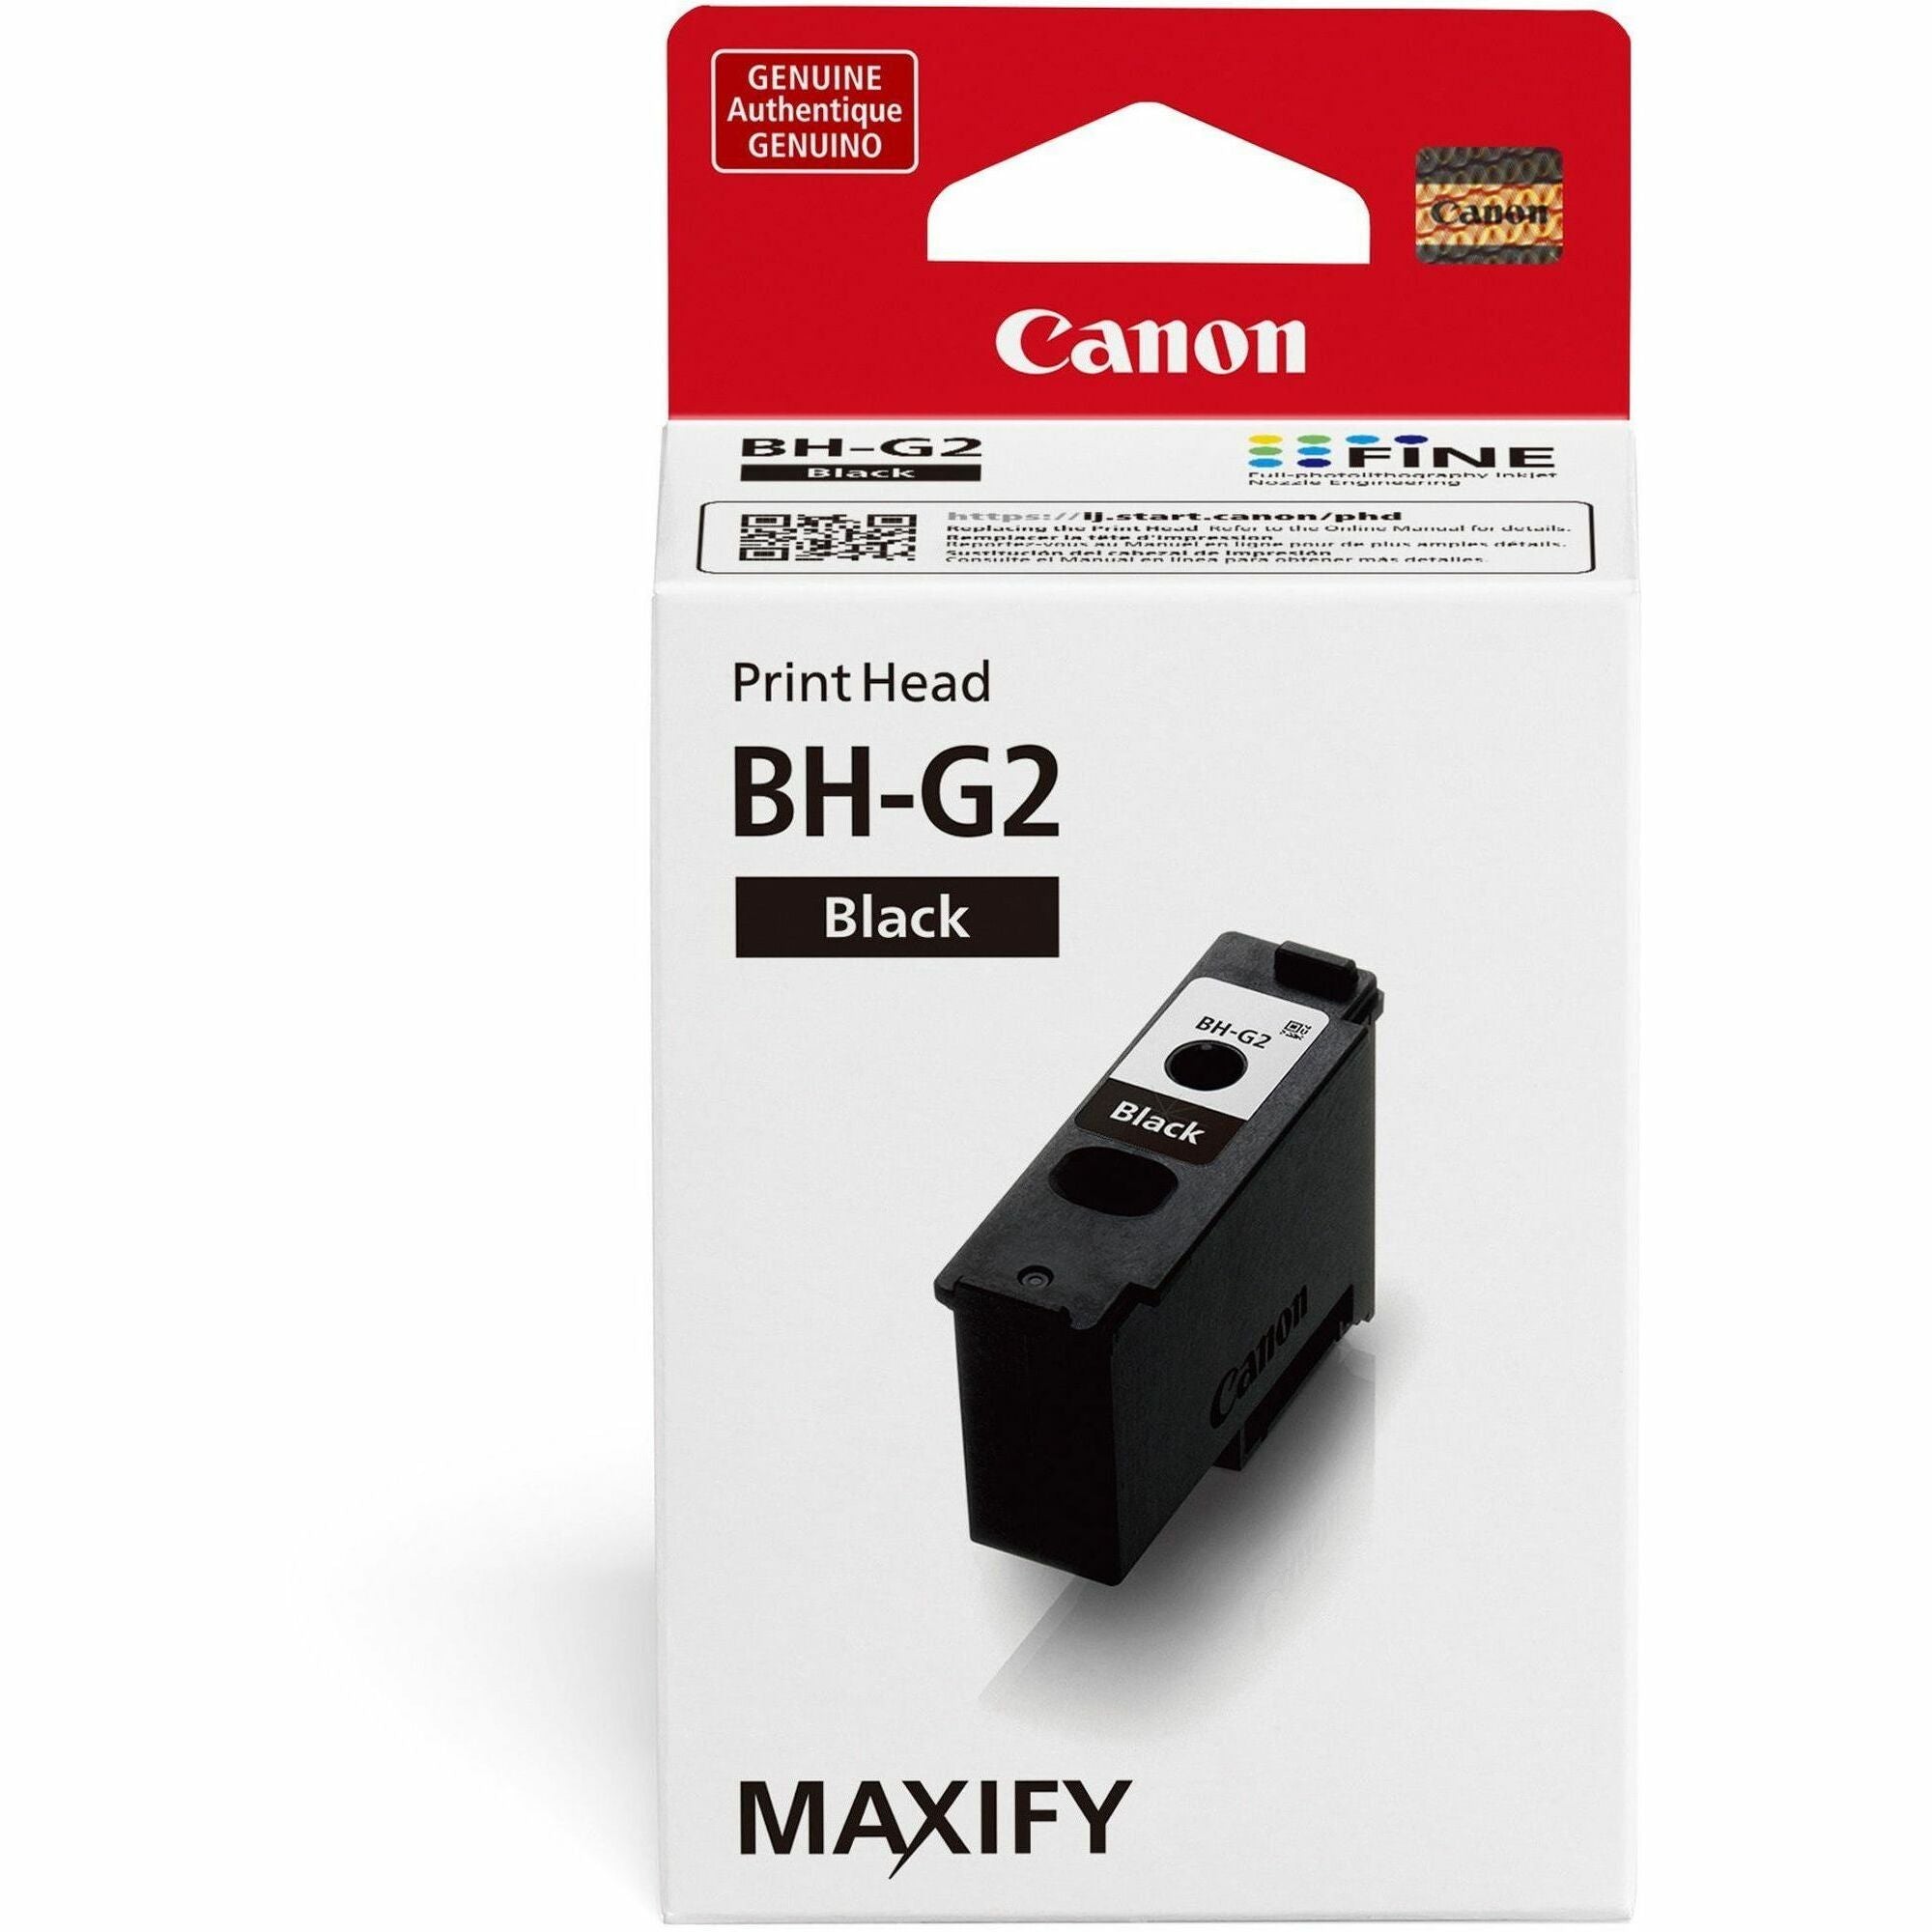 canon-bh-g2-original-inkjet-printhead-black-pack_cnm6160c002 - 1